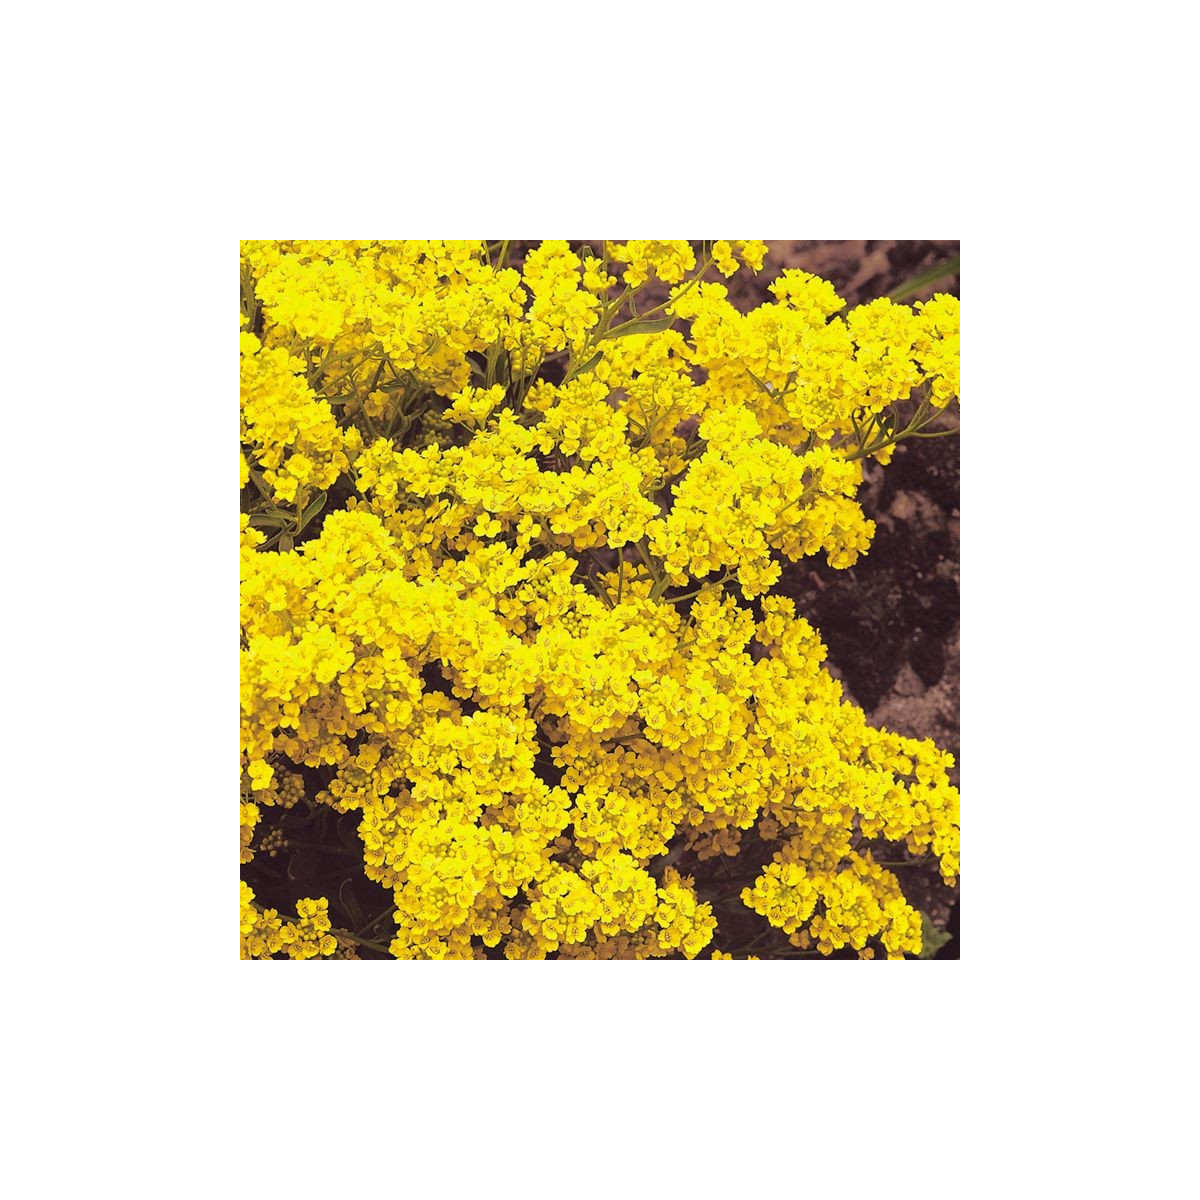 Tařice skalní - Alyssum saxatile - Gold dust - semena - 150 ks